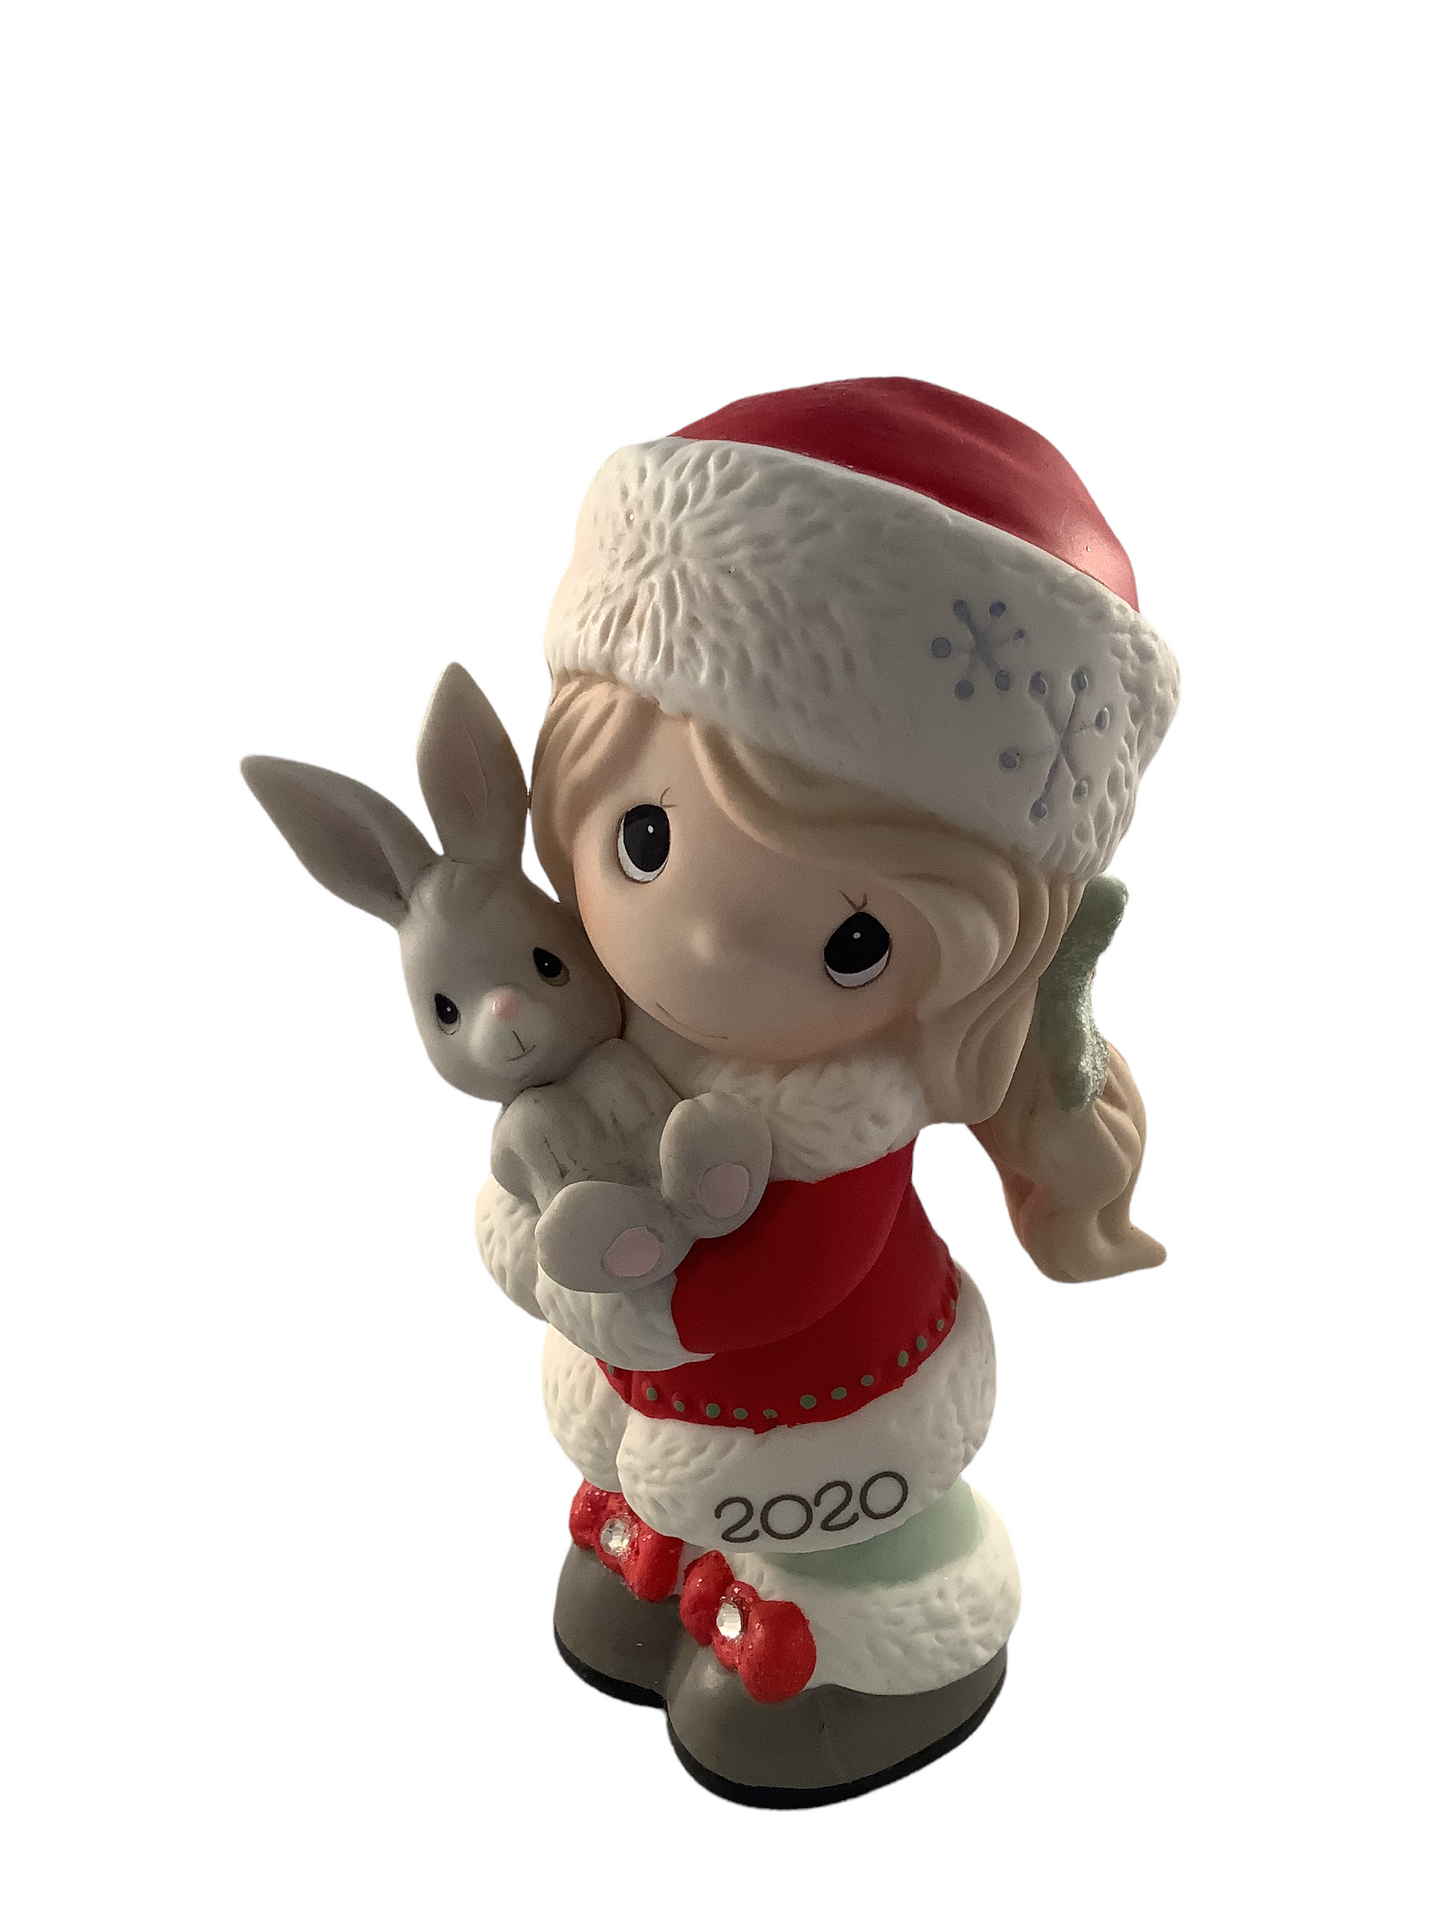 Every Bunny Loves A Christmas Hug - Dated Annual 2020 Precious Moment Figurine